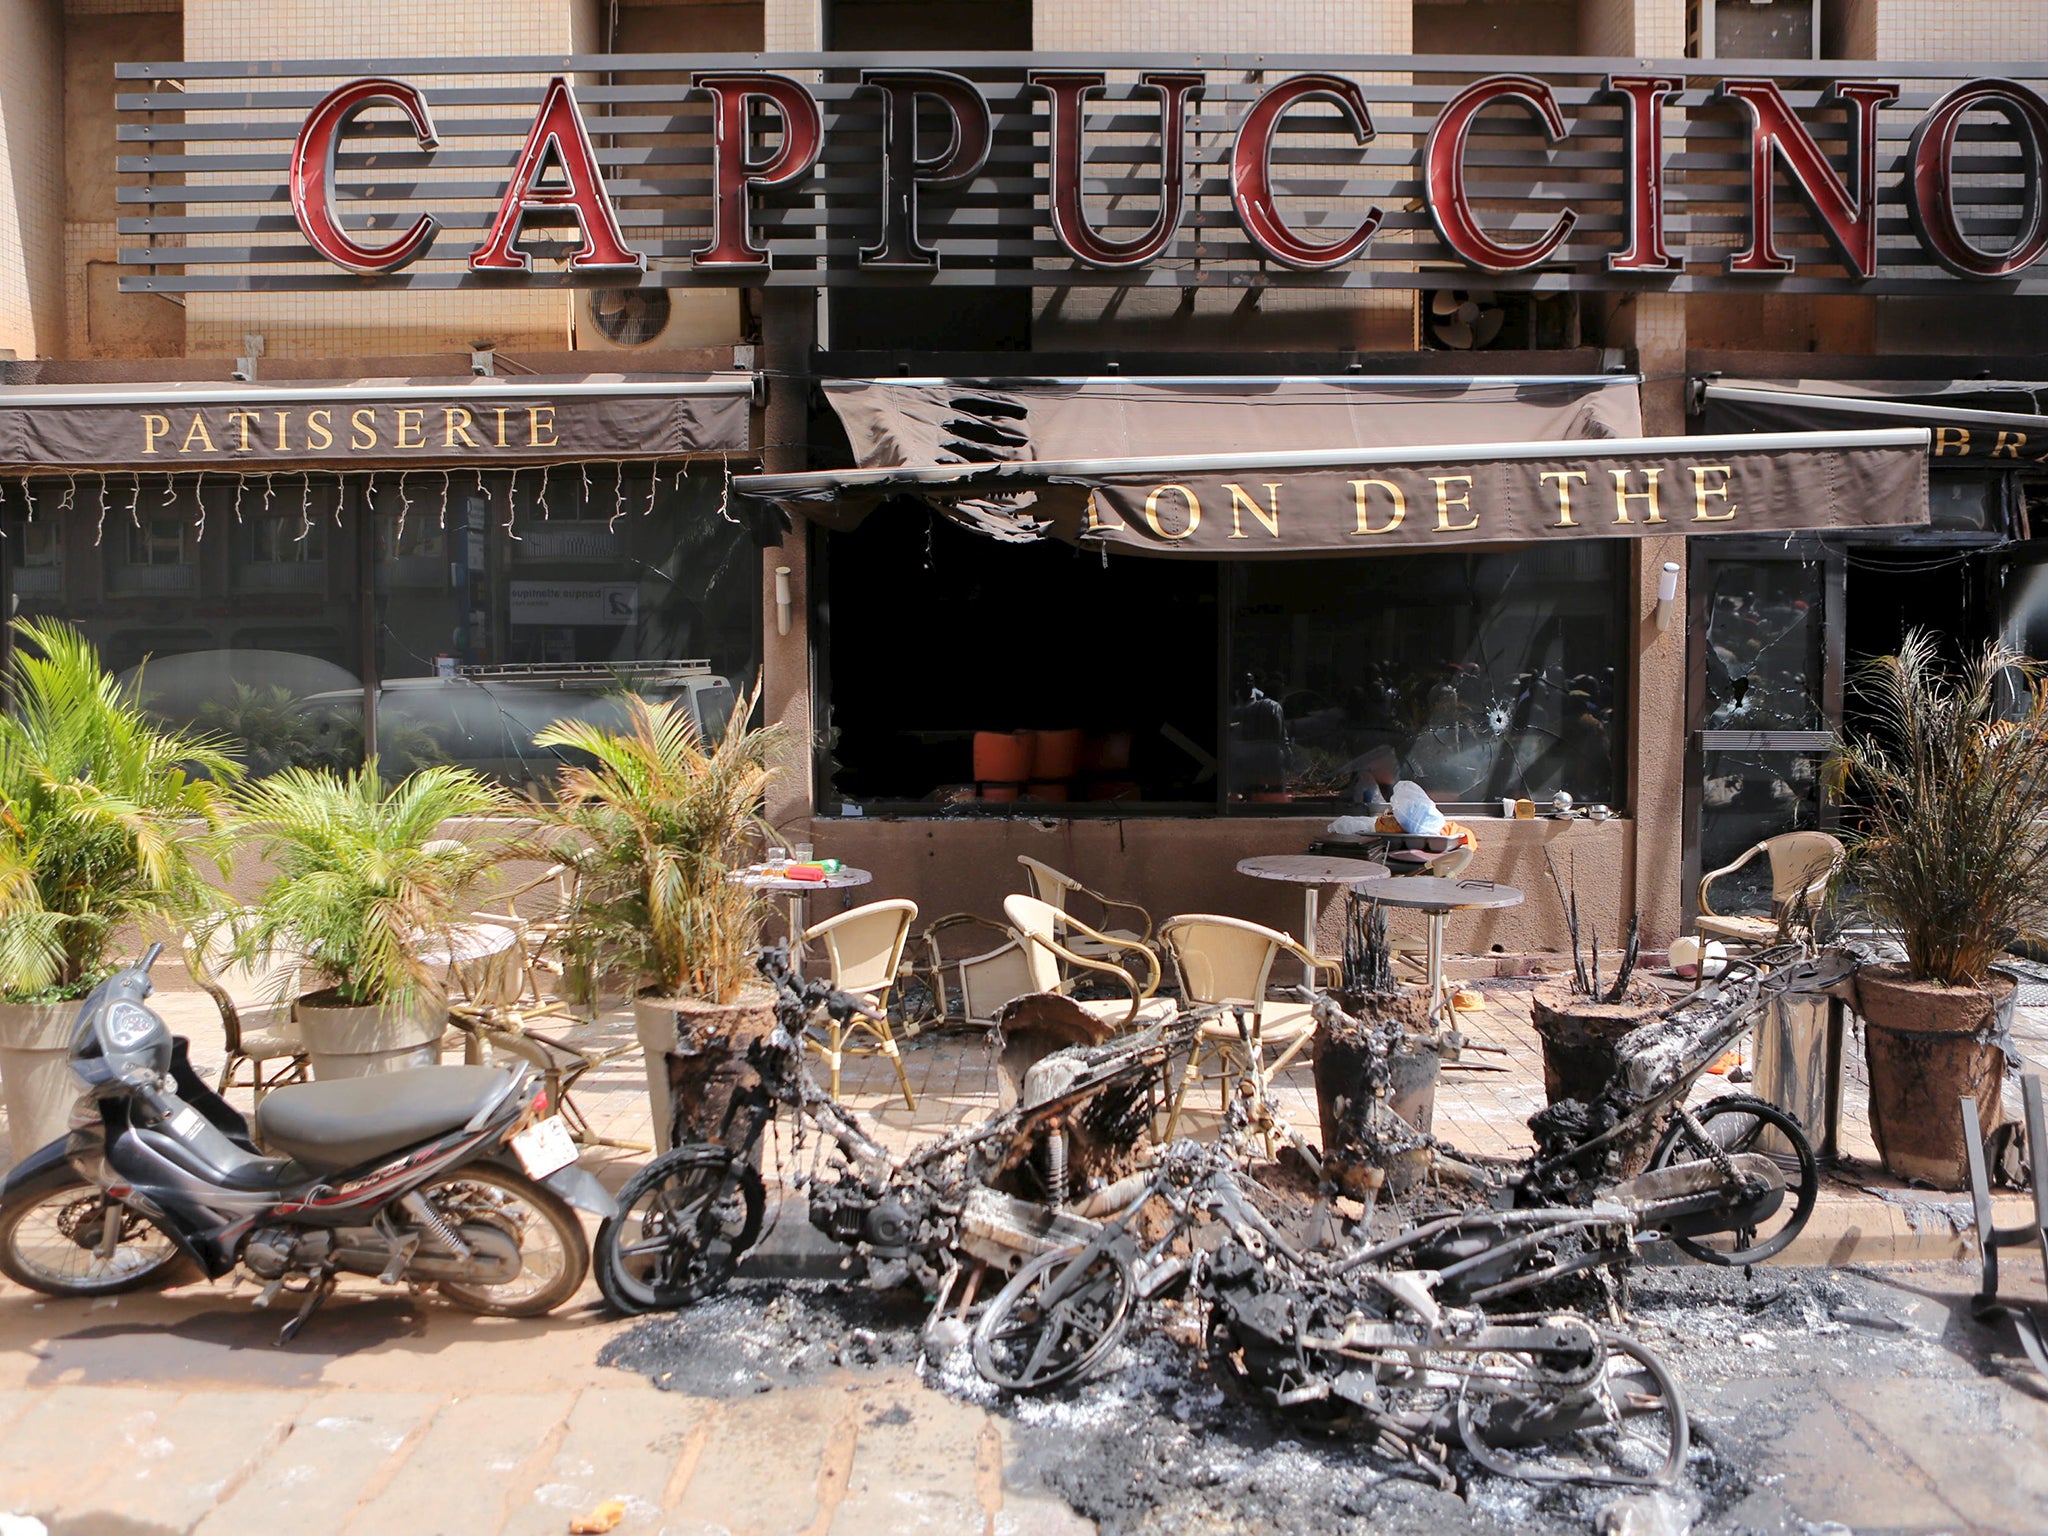 The burned-out exterior of "Cappuccino" restaurant is seen in Ouagadougou, Burkina Faso